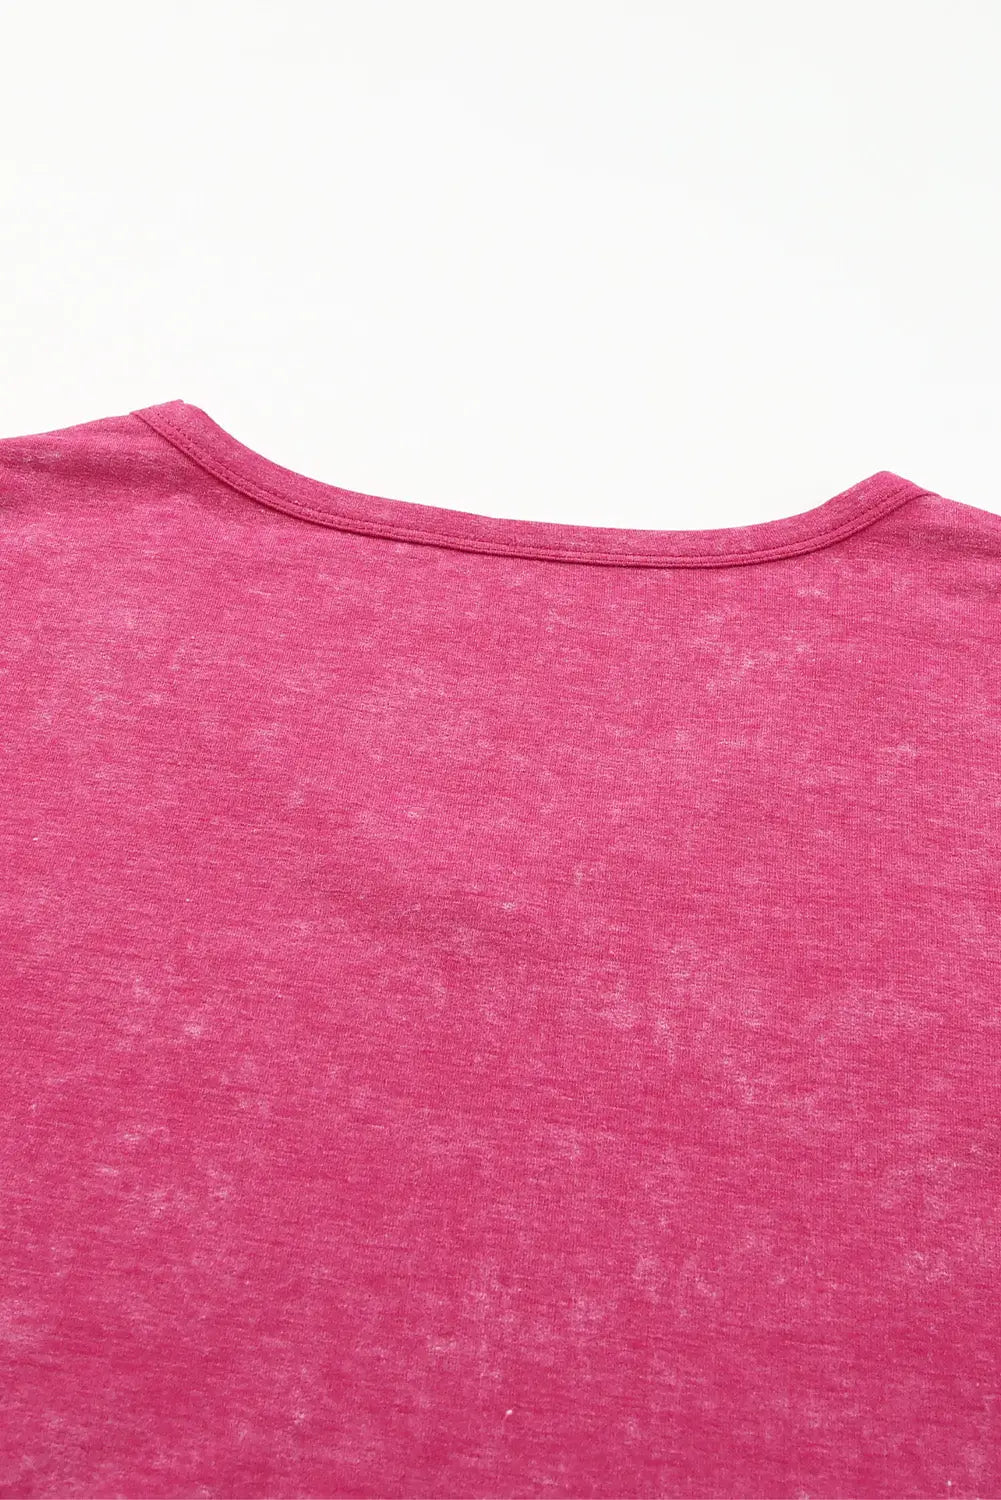 Rose mineral washed v neck short sleeve t shirt - t-shirts